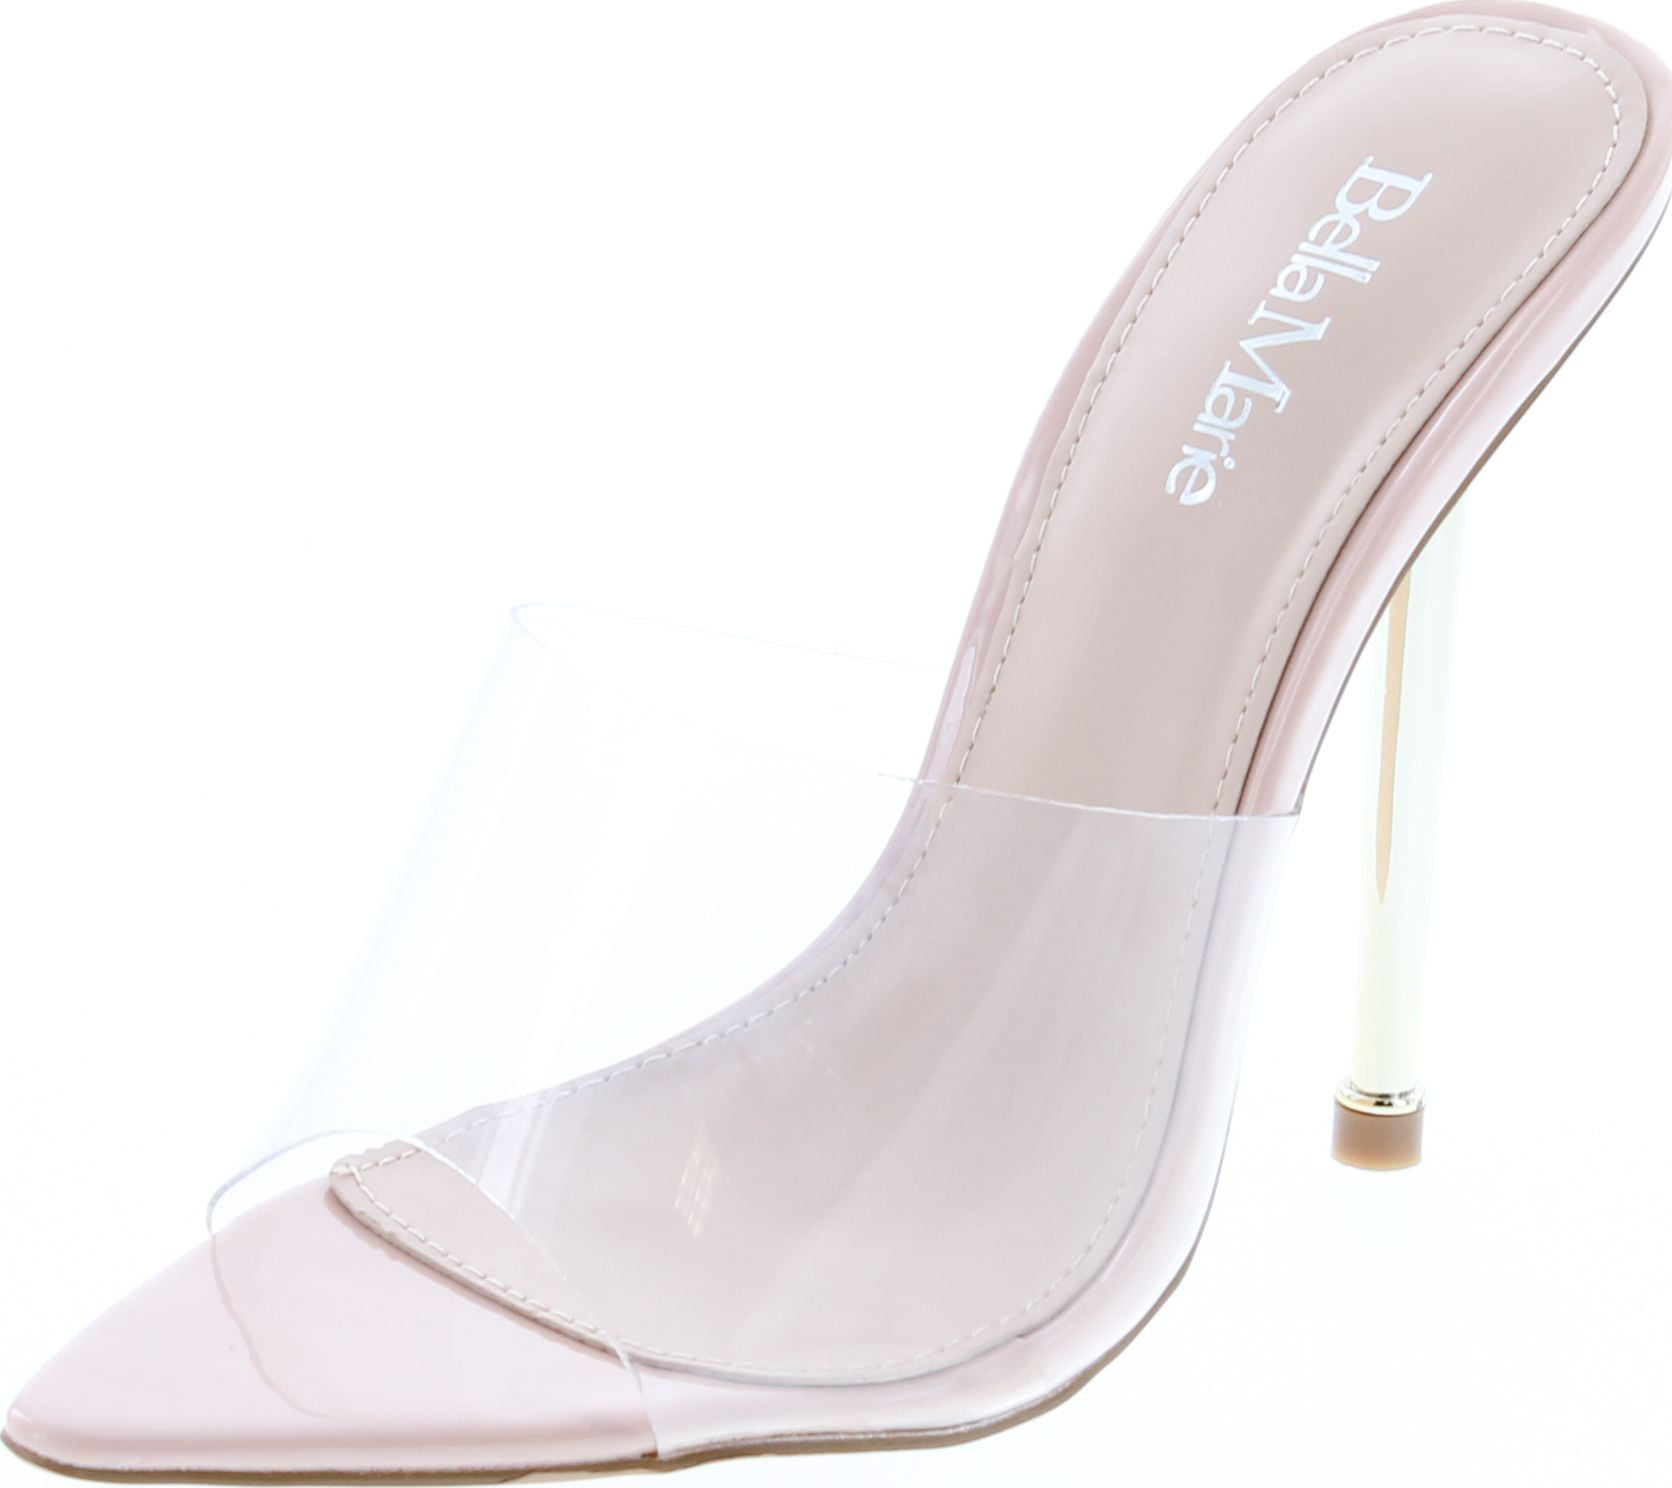 bella marie shoes website